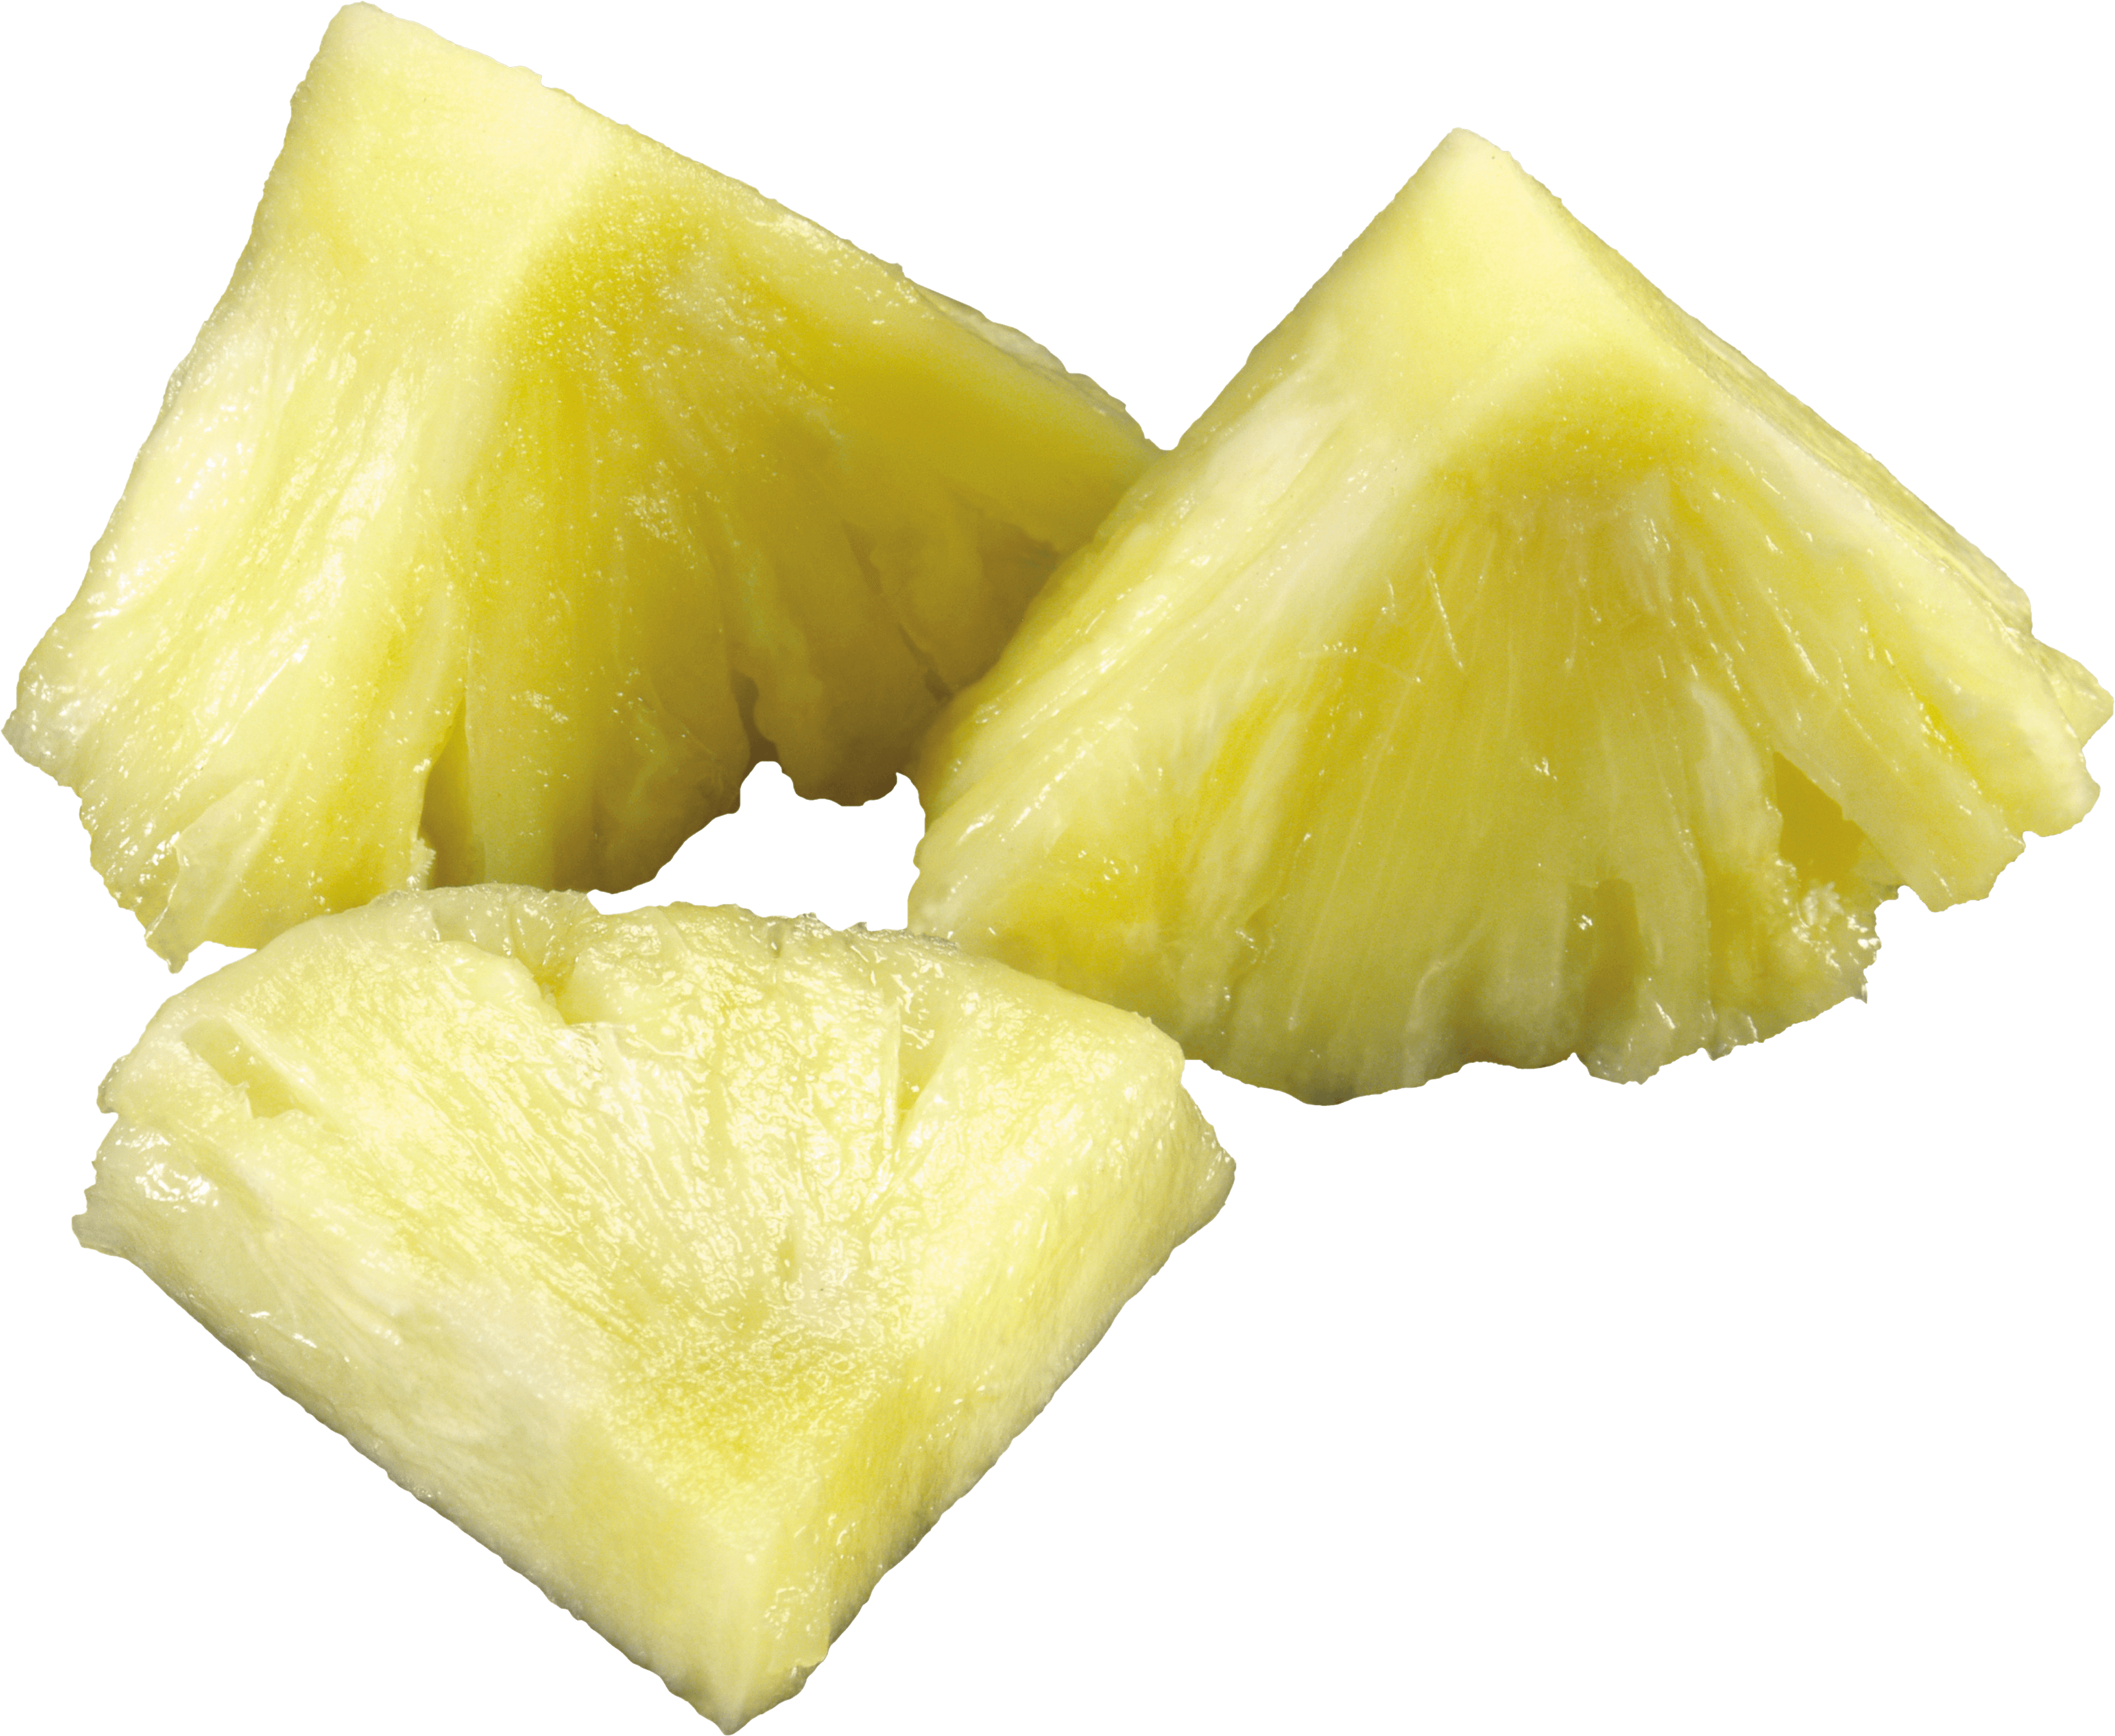 Grenade Macadamia Pineapple Papaya Fitness PNG